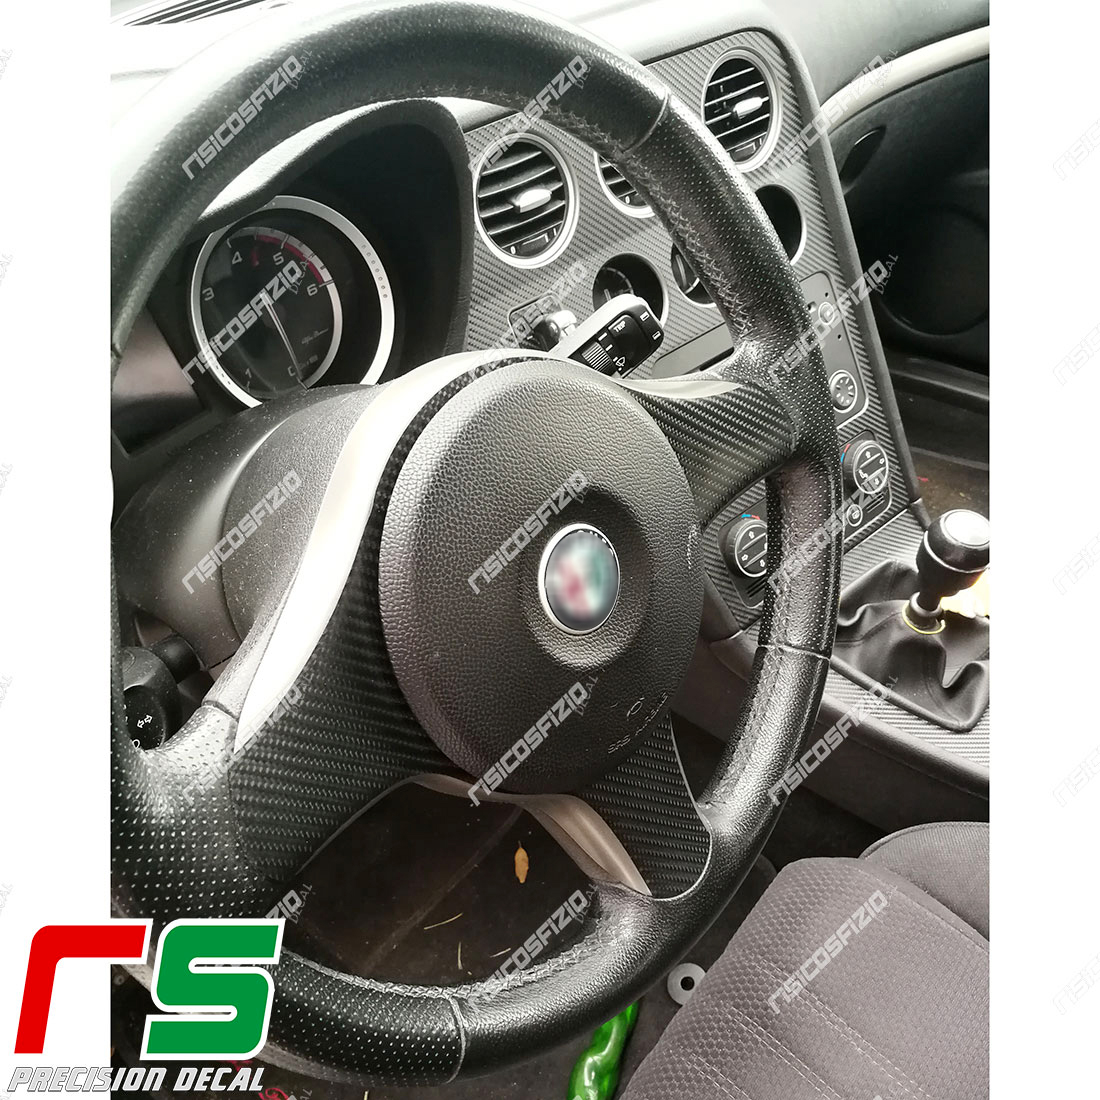 Oyddl 3 pieces steering wheel trim car sticker carbon fibre compatible with  Alfa Romeo 159 939 Brera Spider accessories